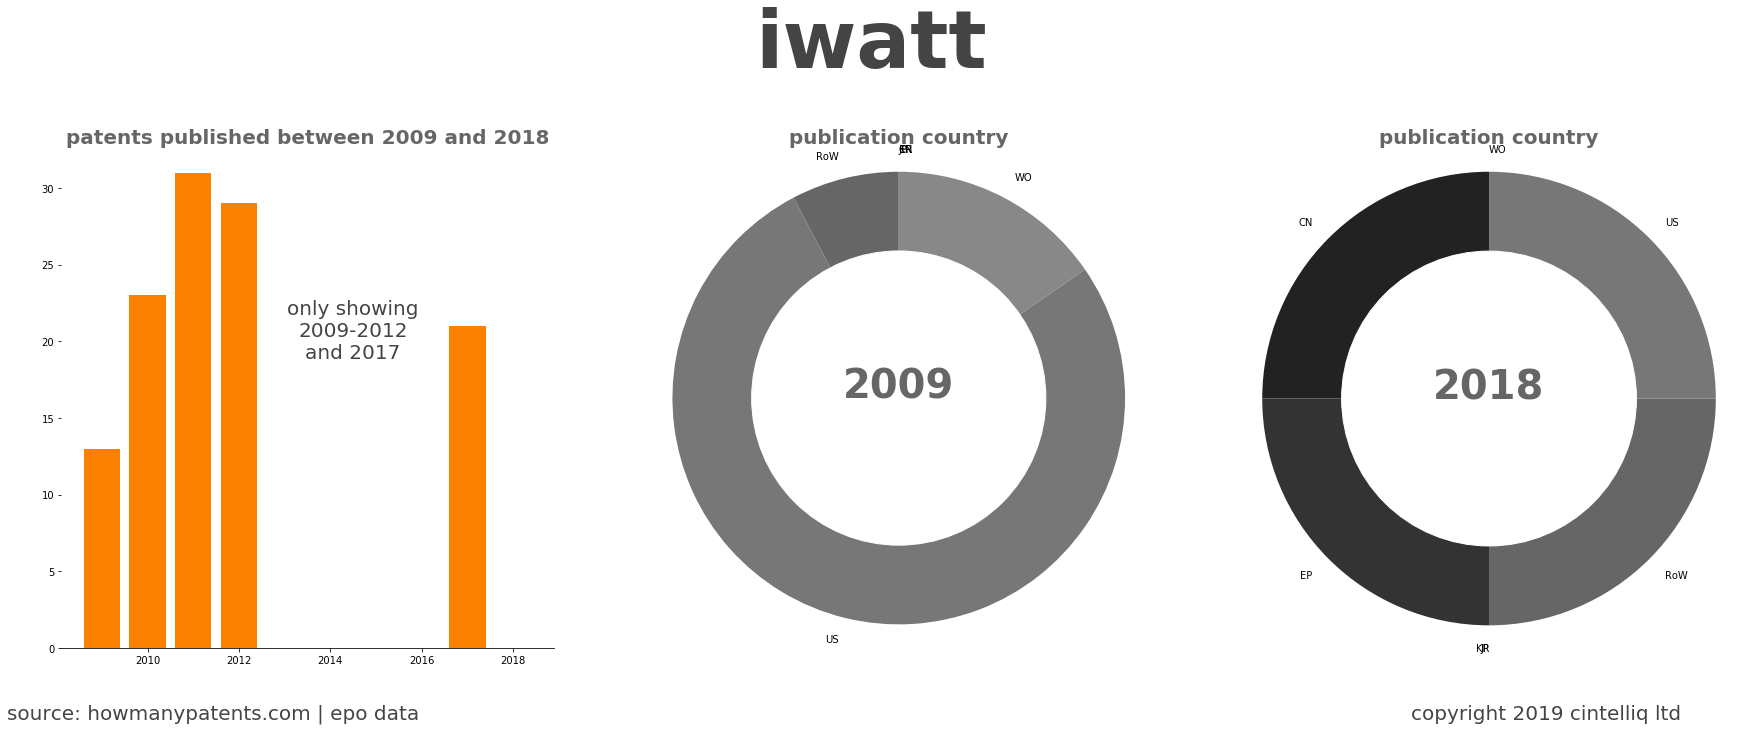 summary of patents for Iwatt